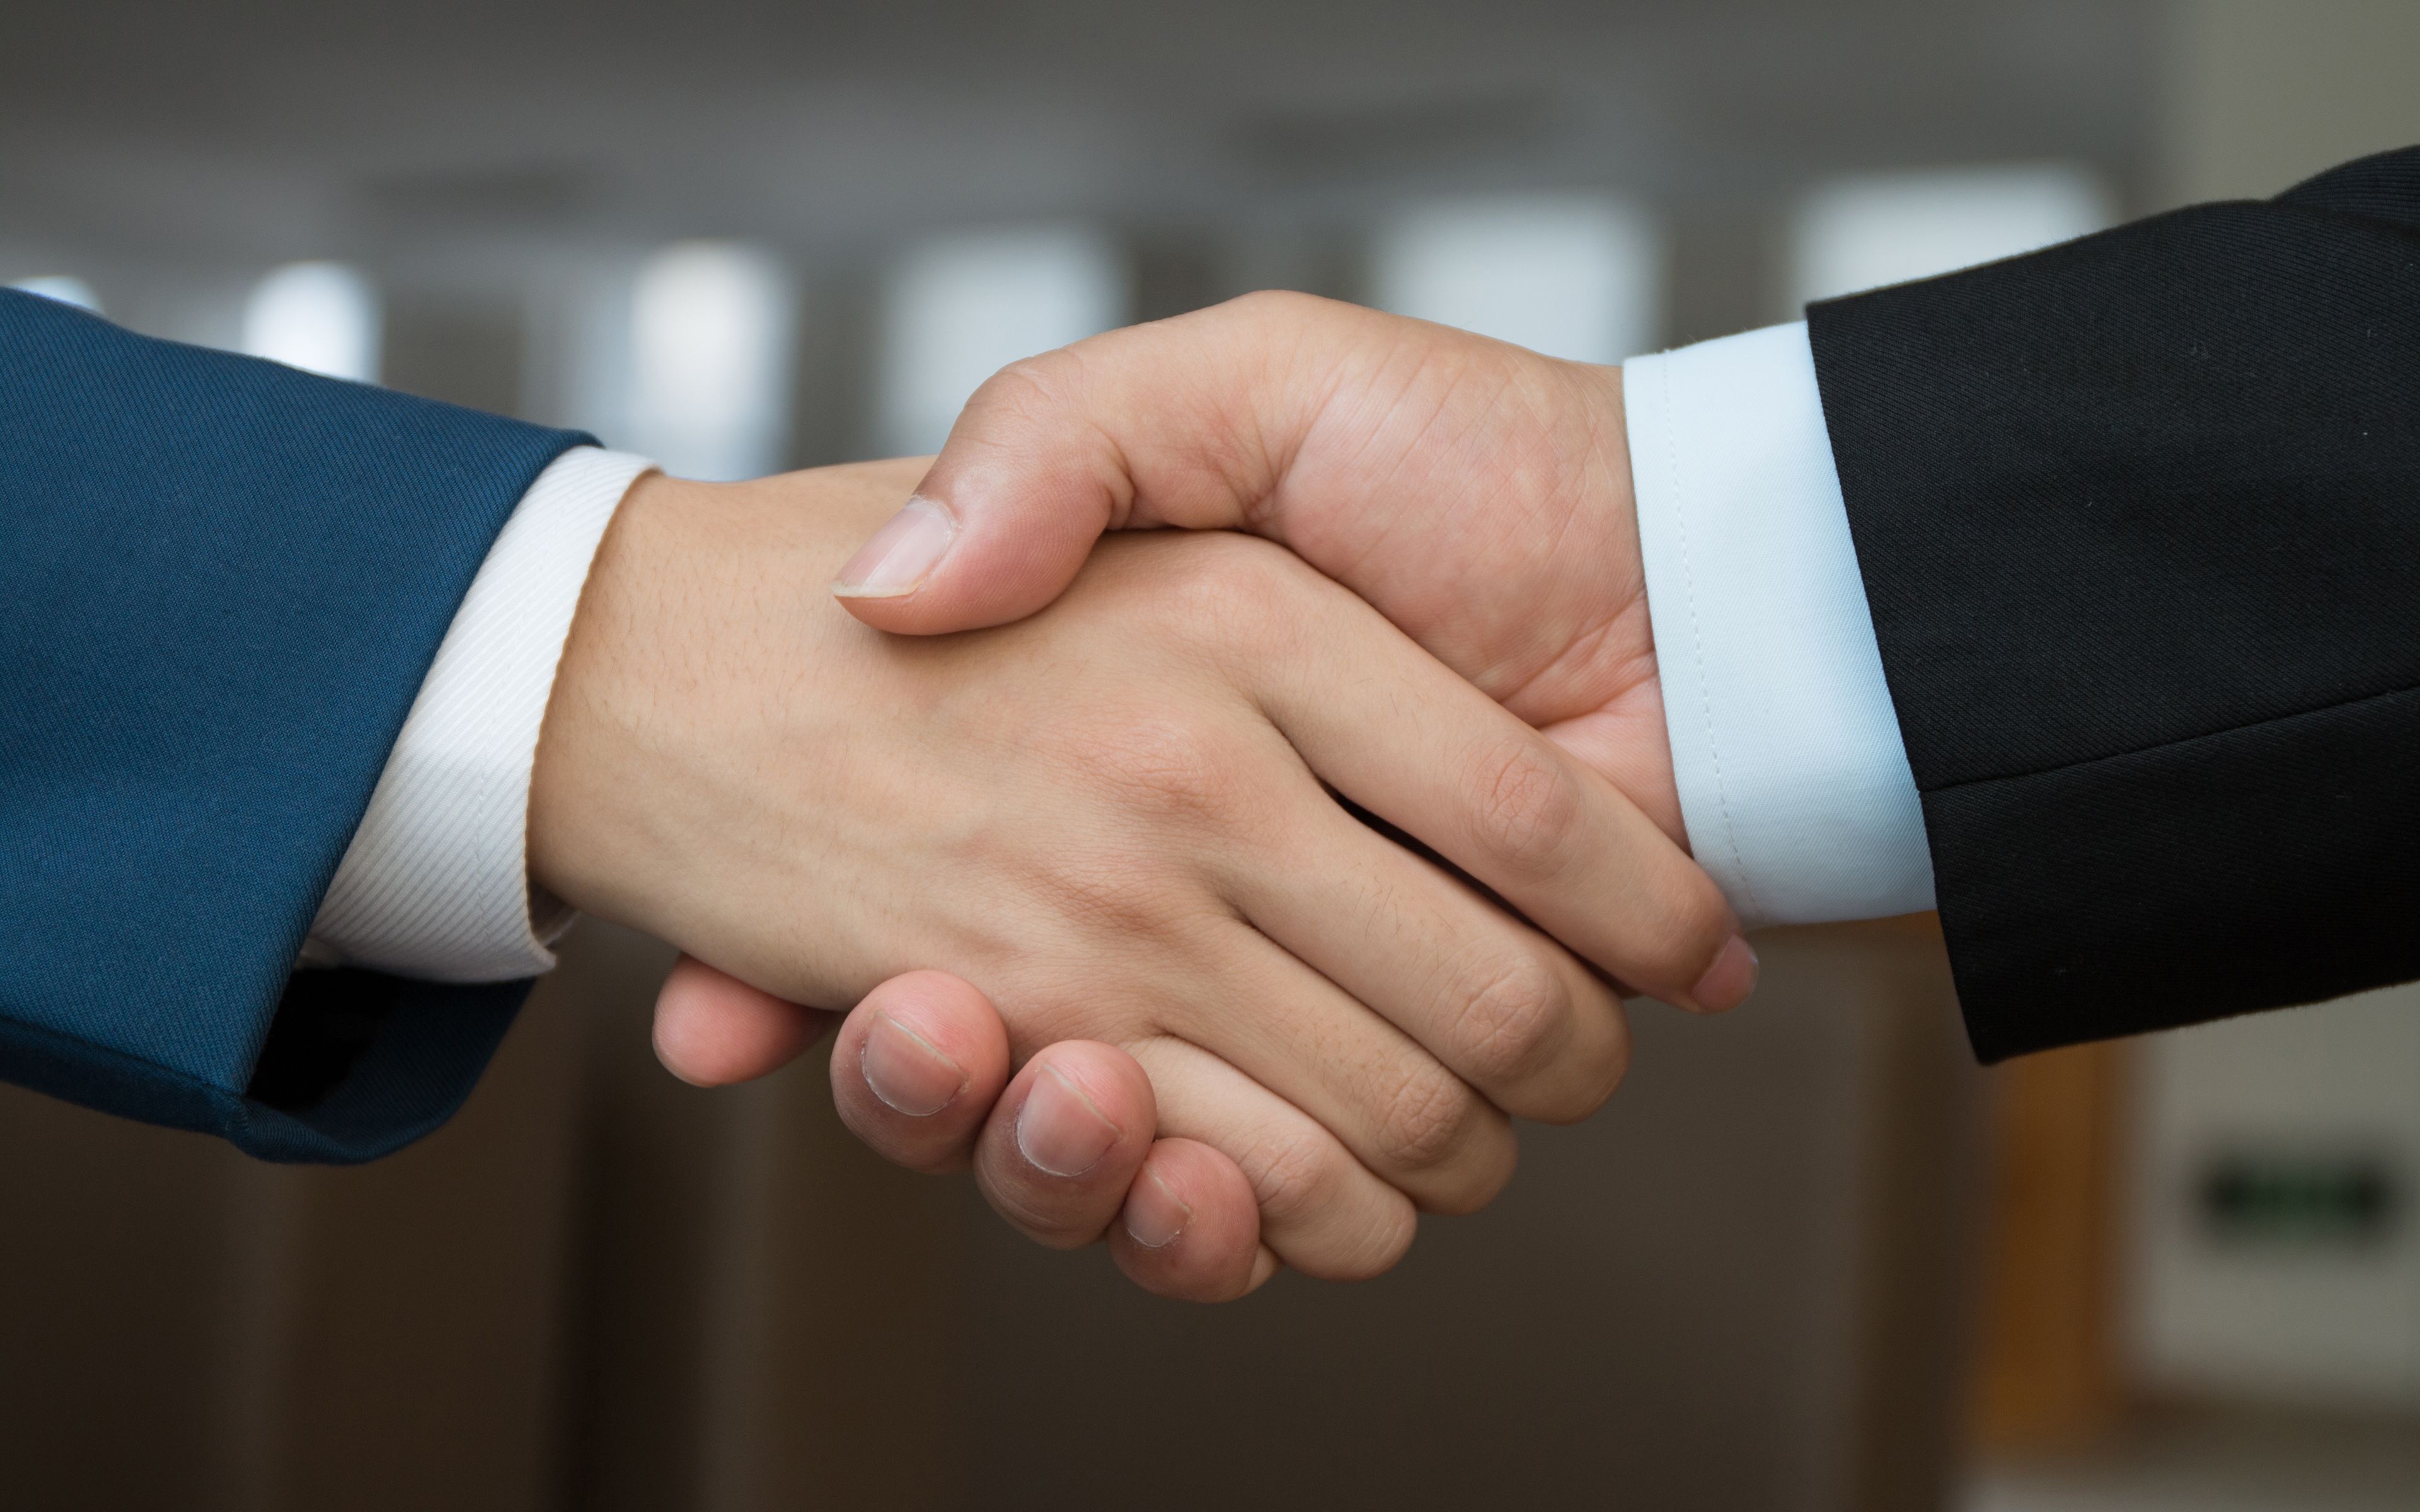 Download wallpaper handshake, business concepts, 4k, conclusion